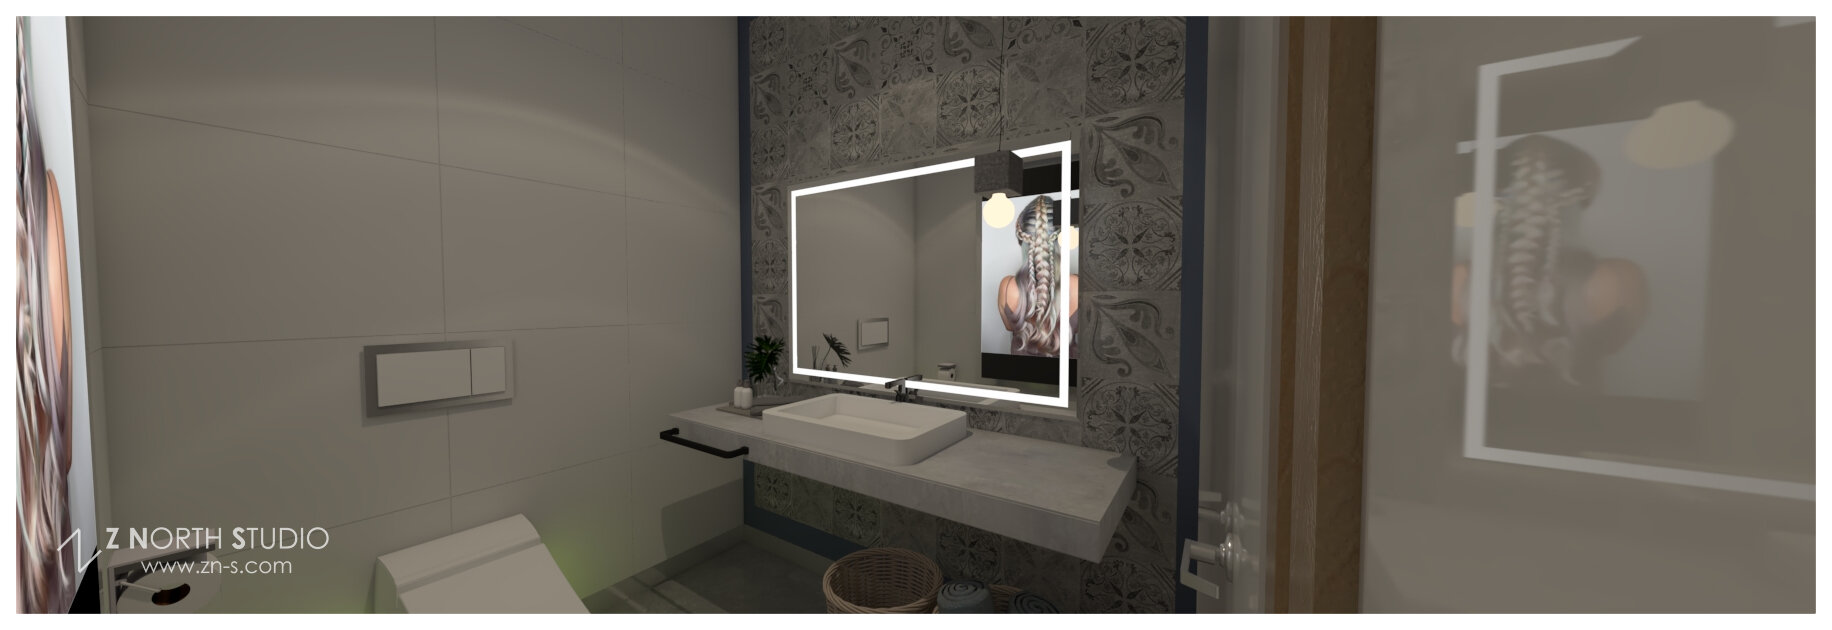 #steamroom #sauna #wellness #spa #shower #interiordesign #bathroom #luxurybathroom w.jpg